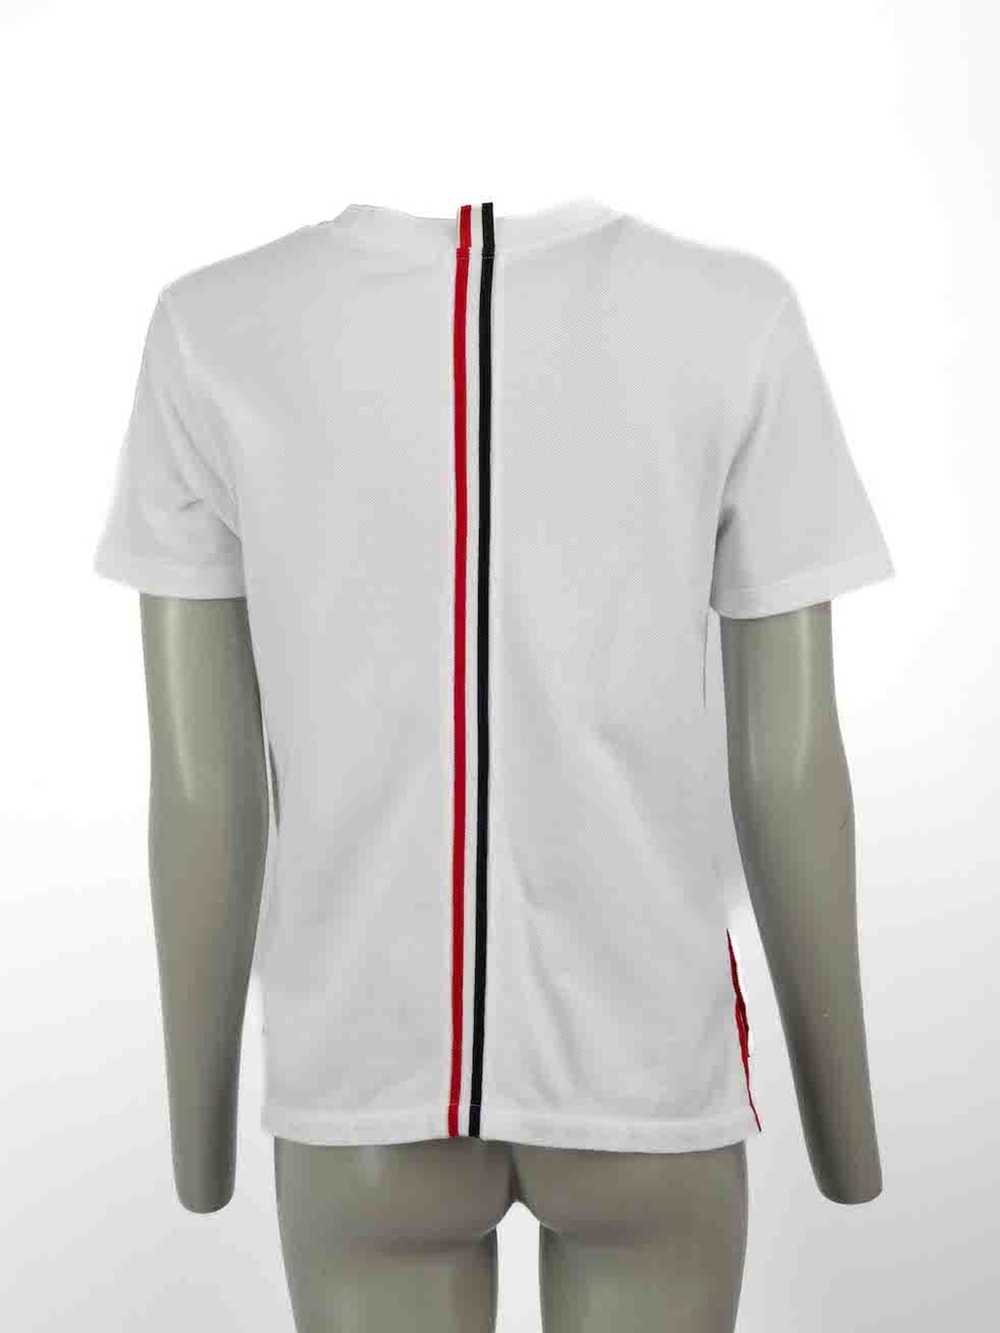 Thom Browne White Stripe Tape Detail T-Shirt - image 3